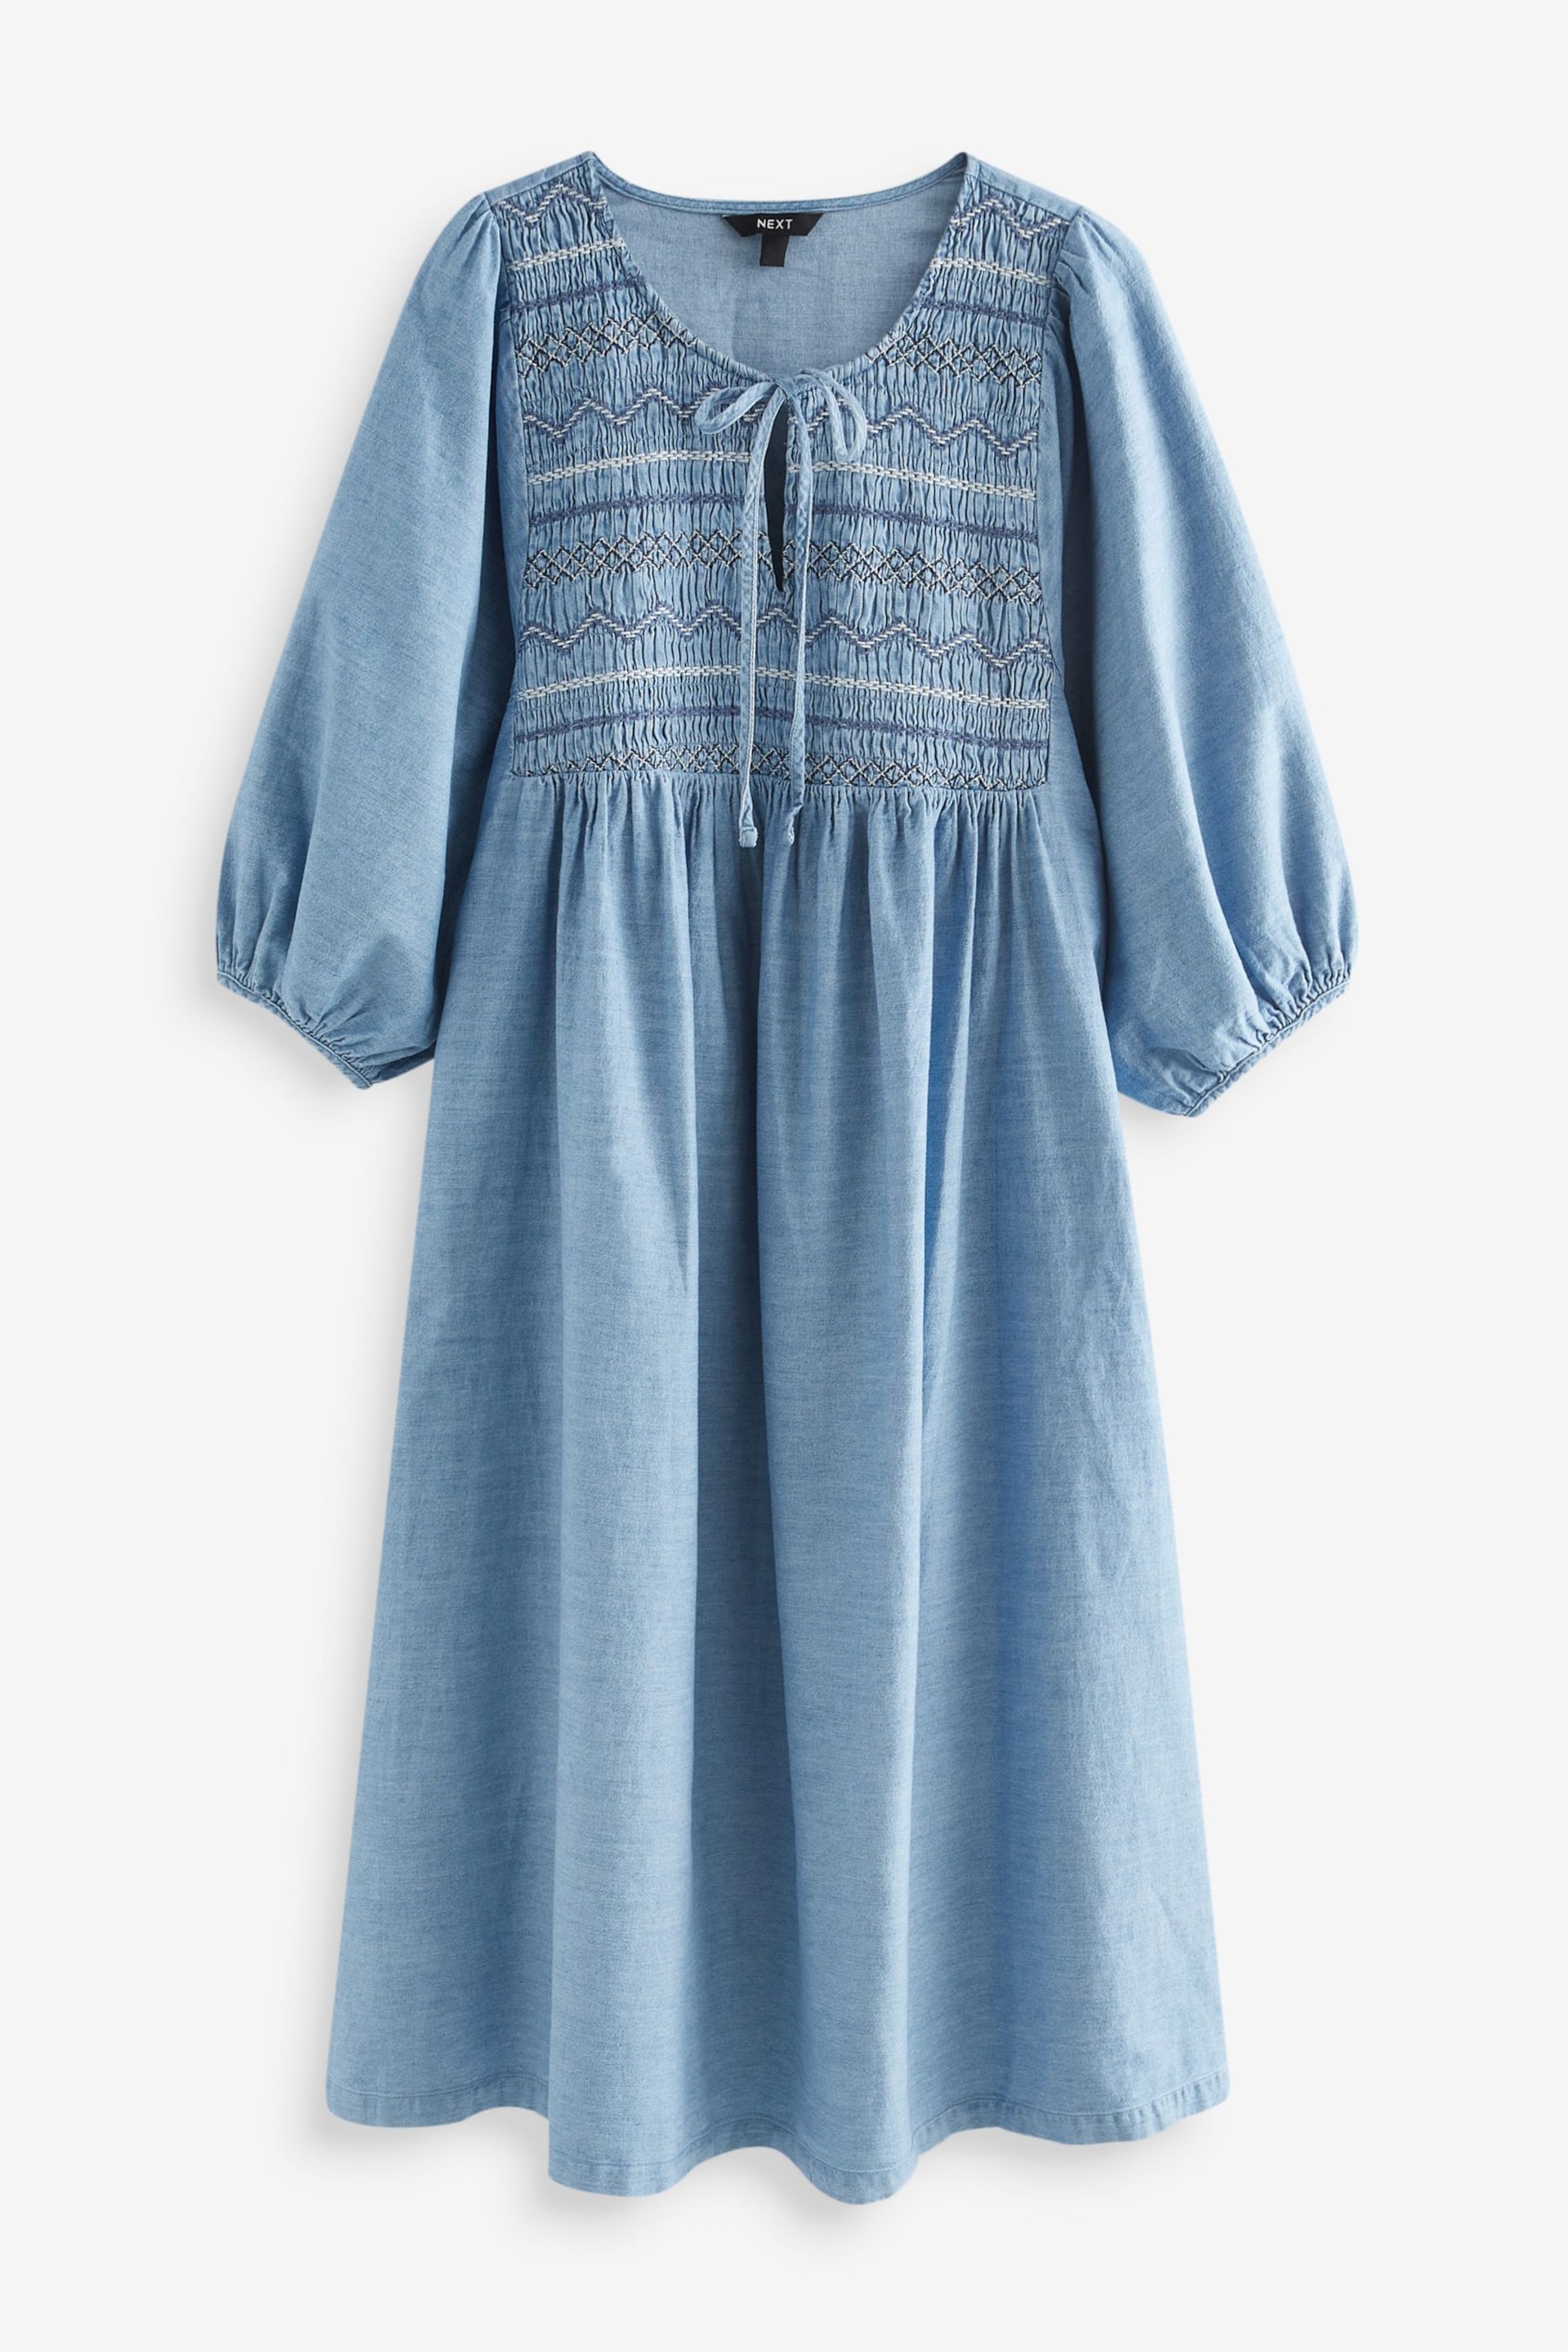 Blue Embroidered Midi Denim Smock Dress - Image 4 of 5